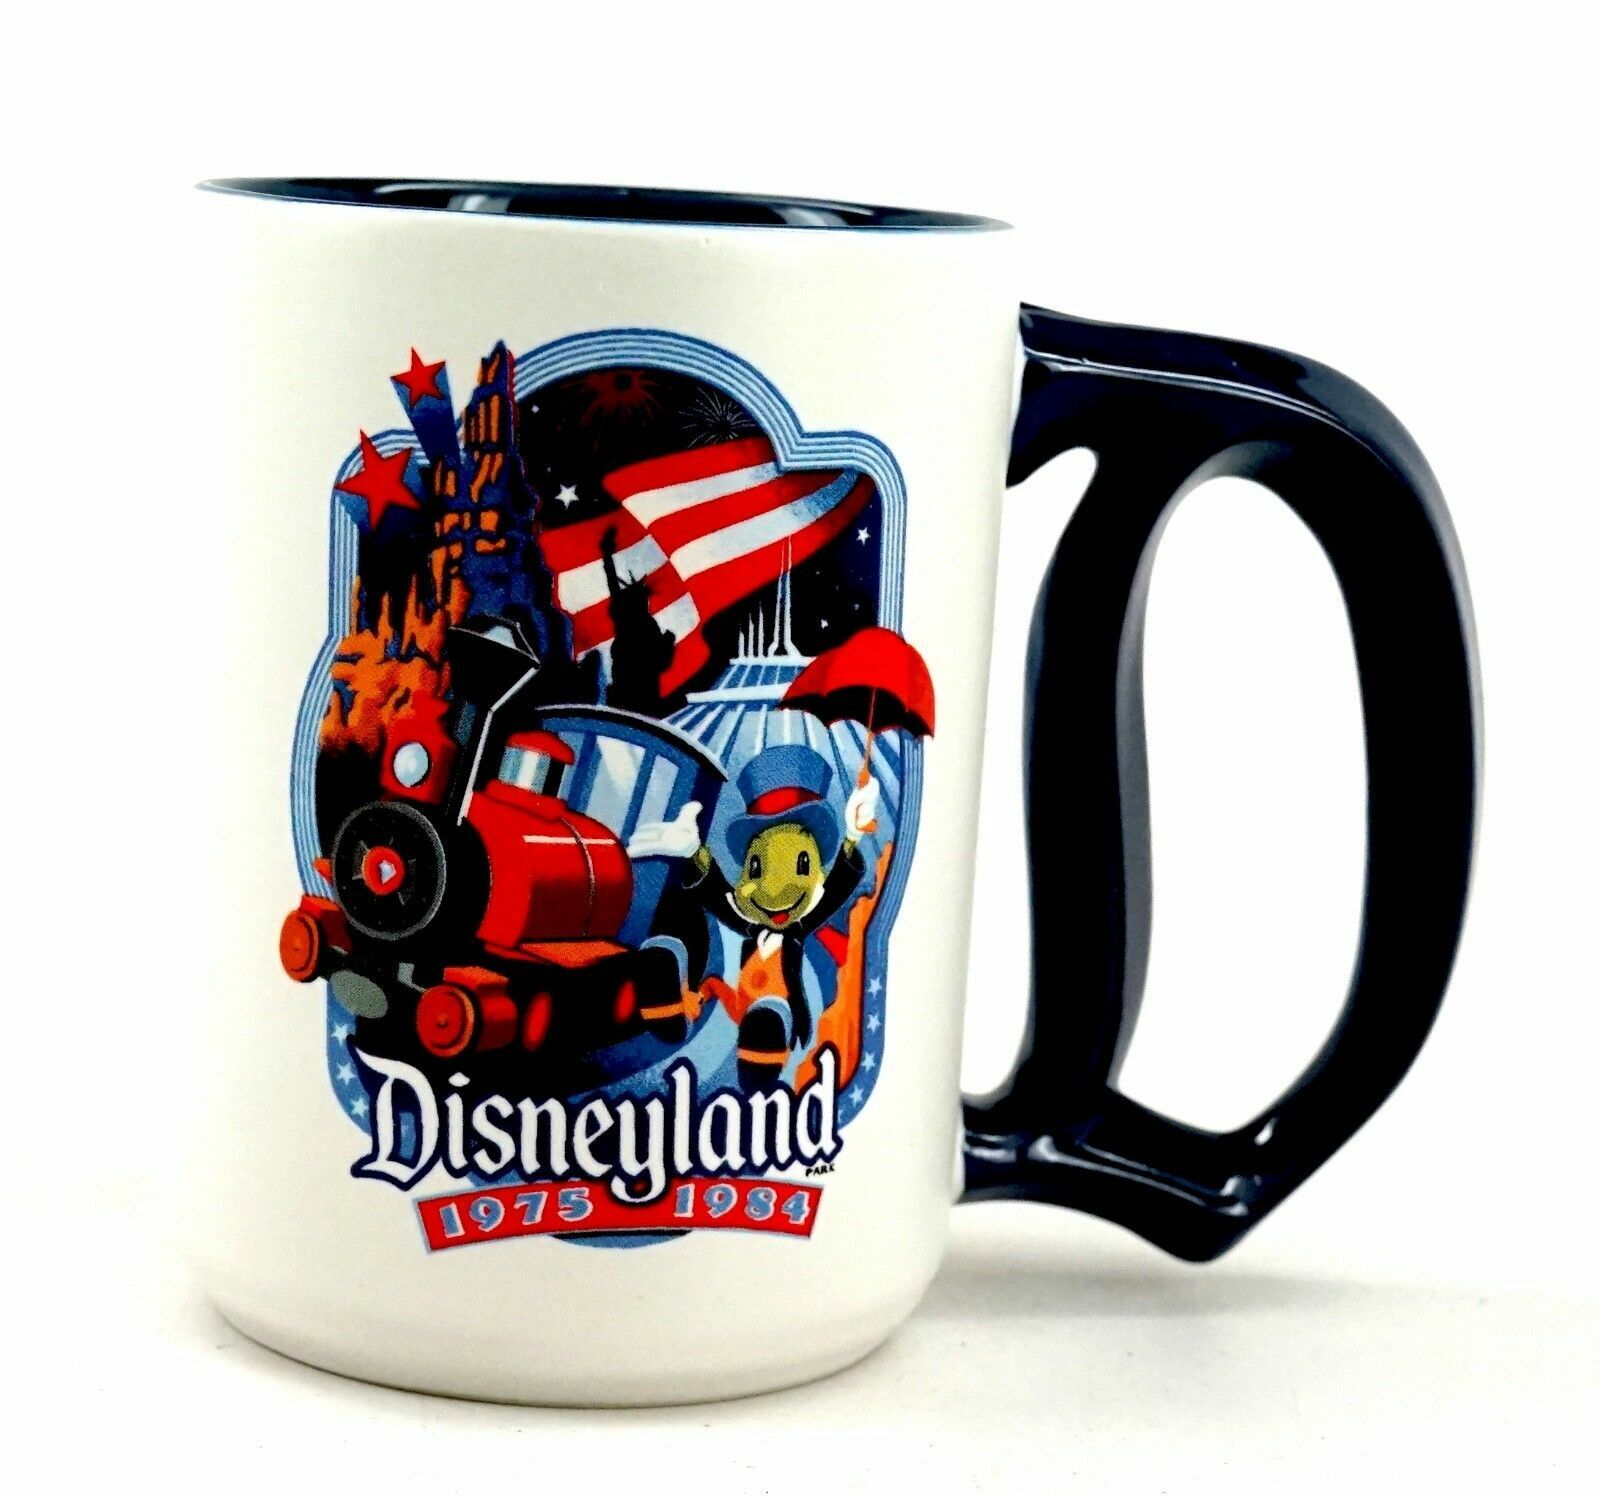 Disney Parks Disneyland Diamond 60th Anniversary 1975-1984 Decades Coffee Mug